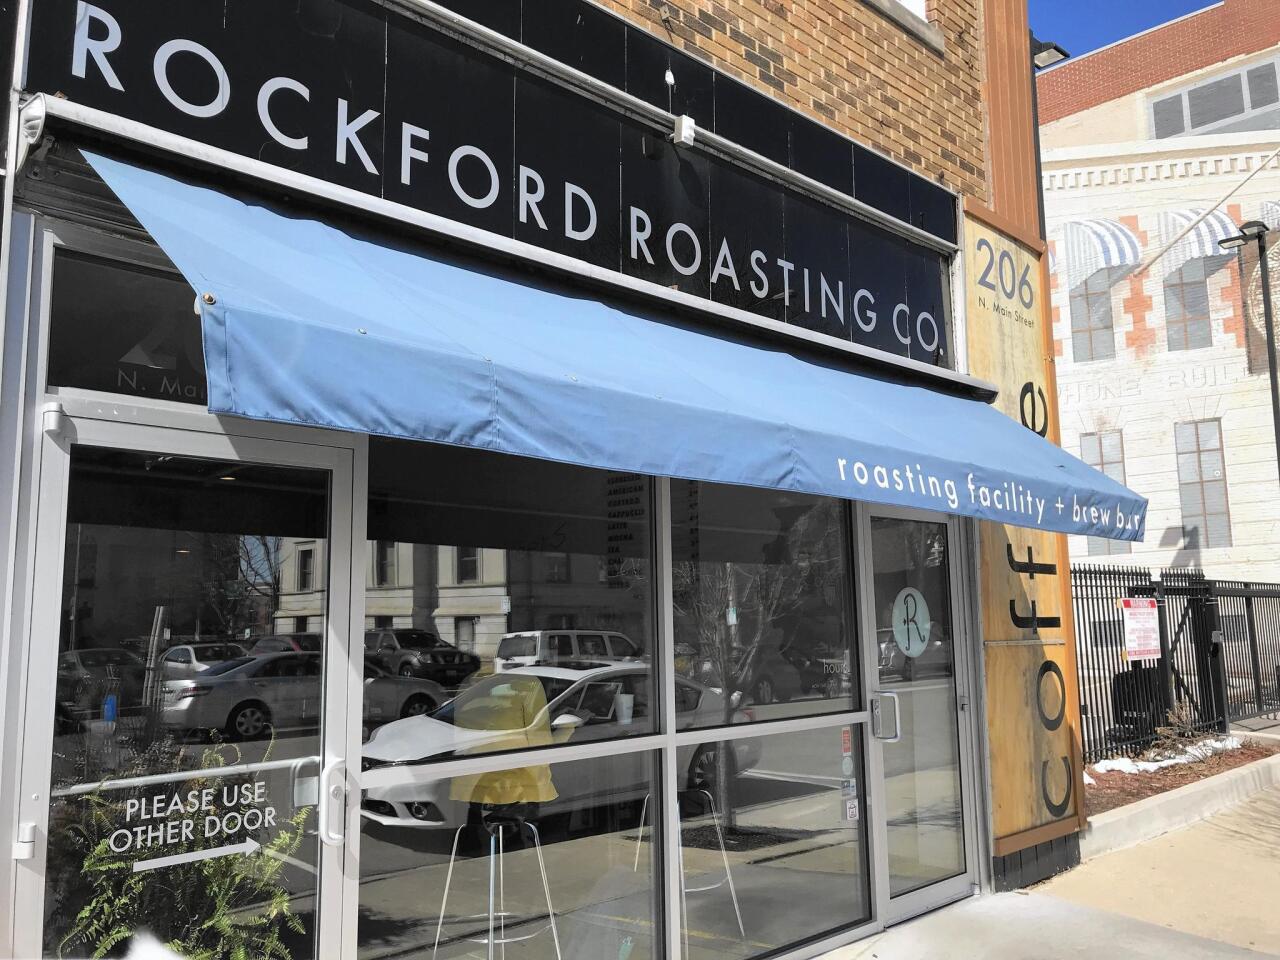 Rockford Roasting Co.